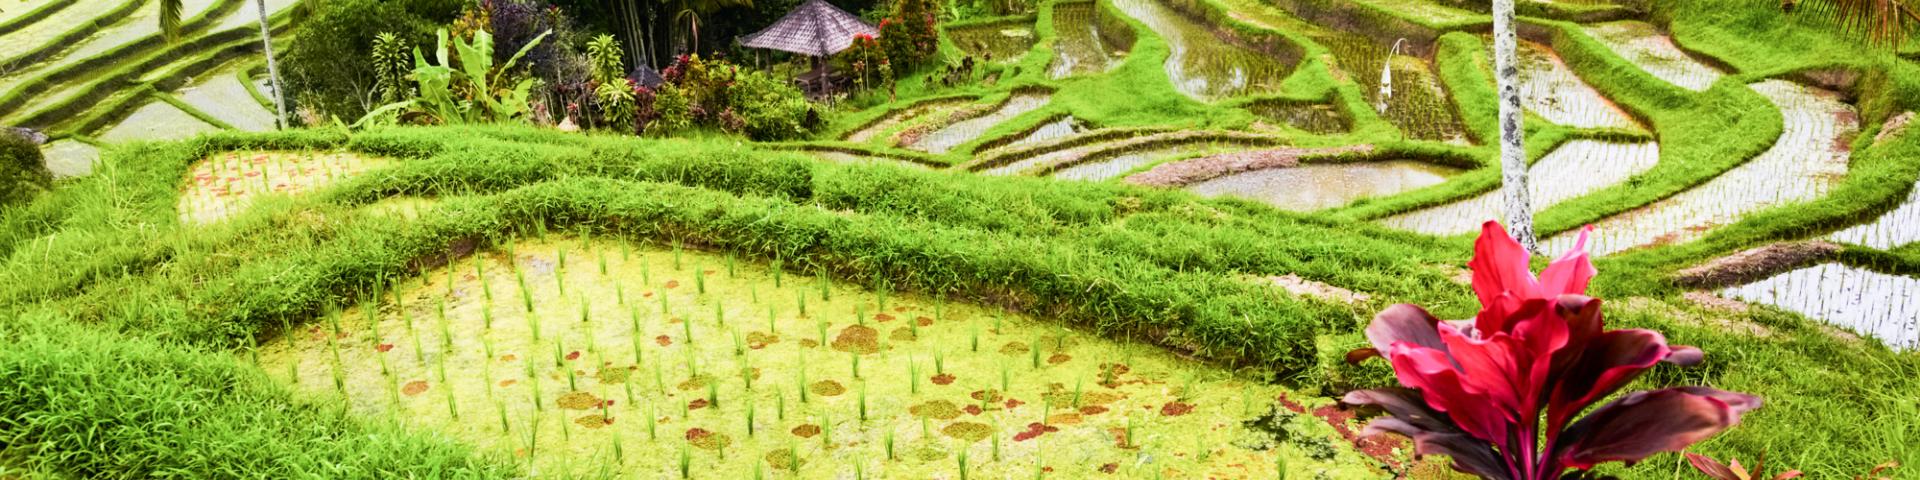 Rice paddies and flower